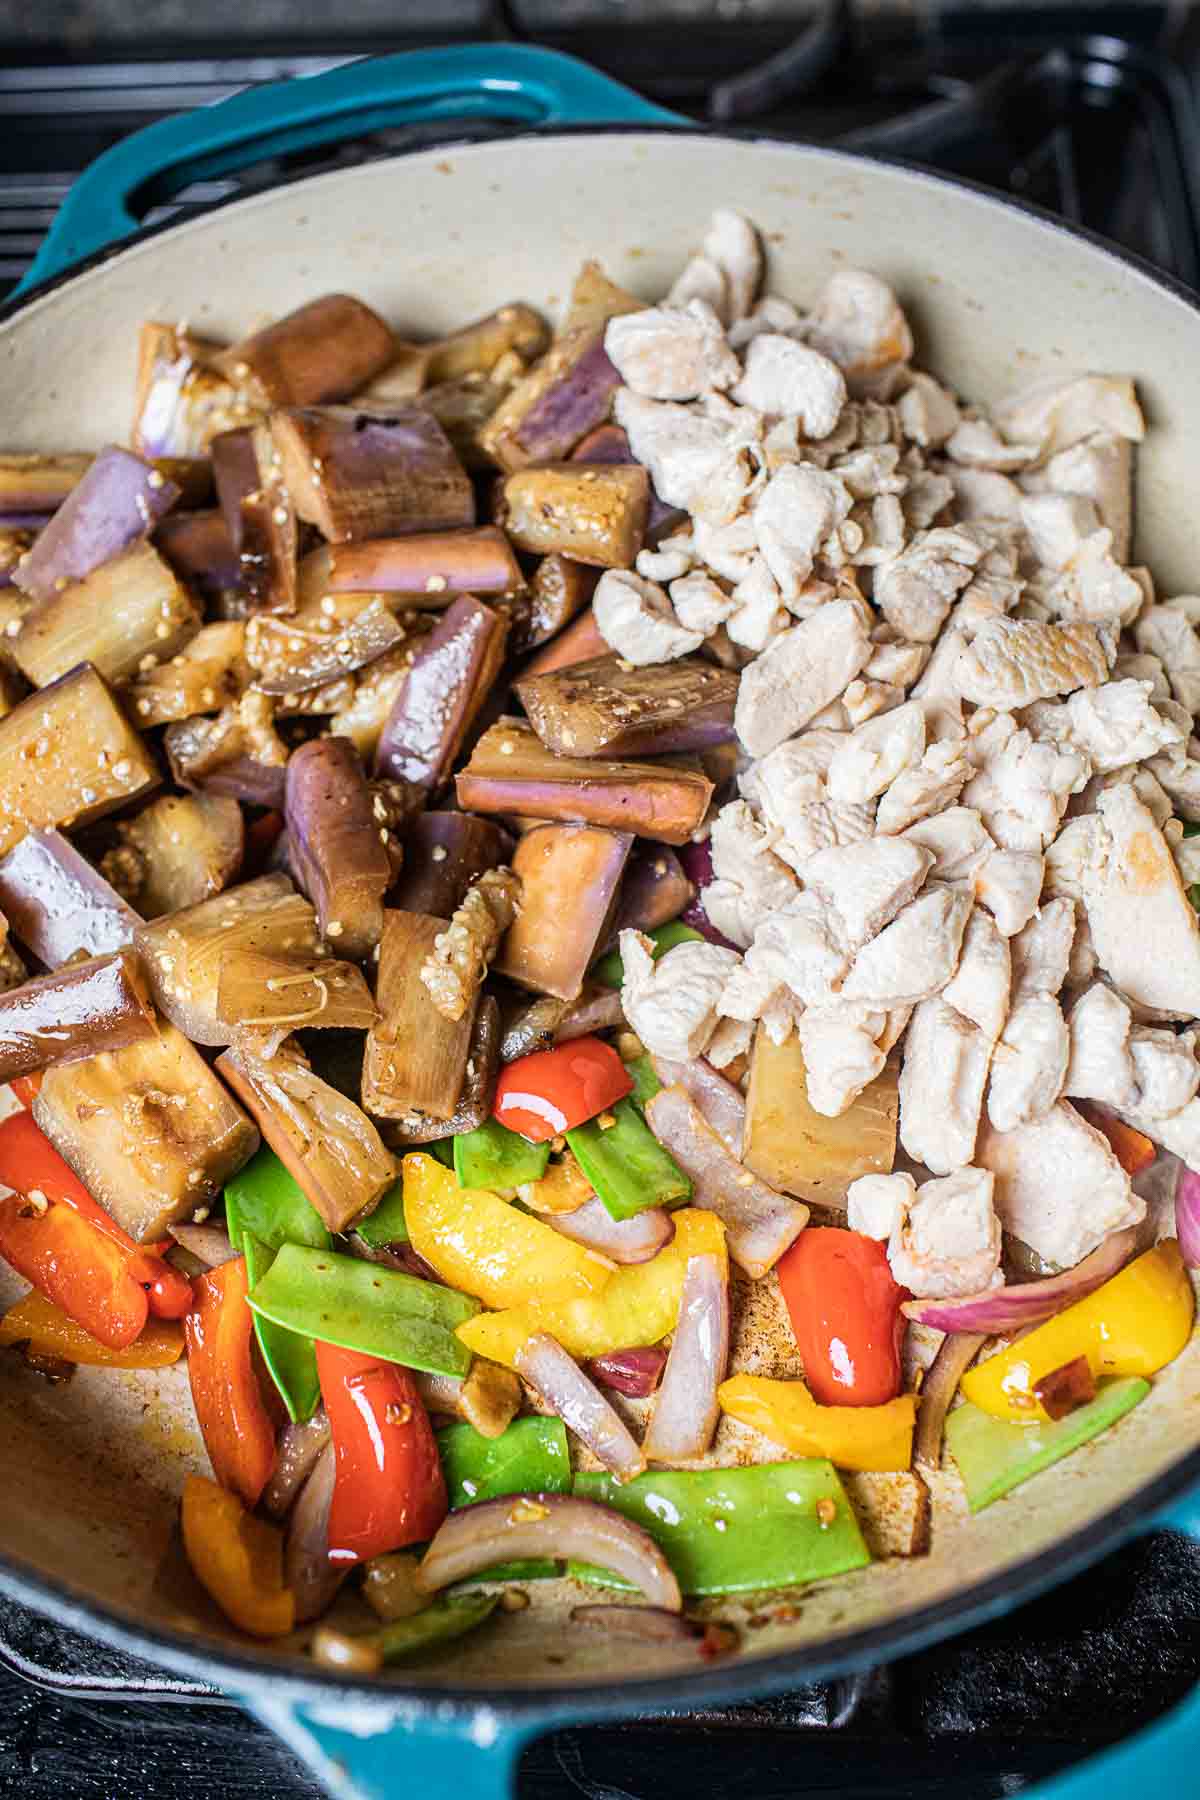 Chicken, eggplant, vegetables in a stir frying pan